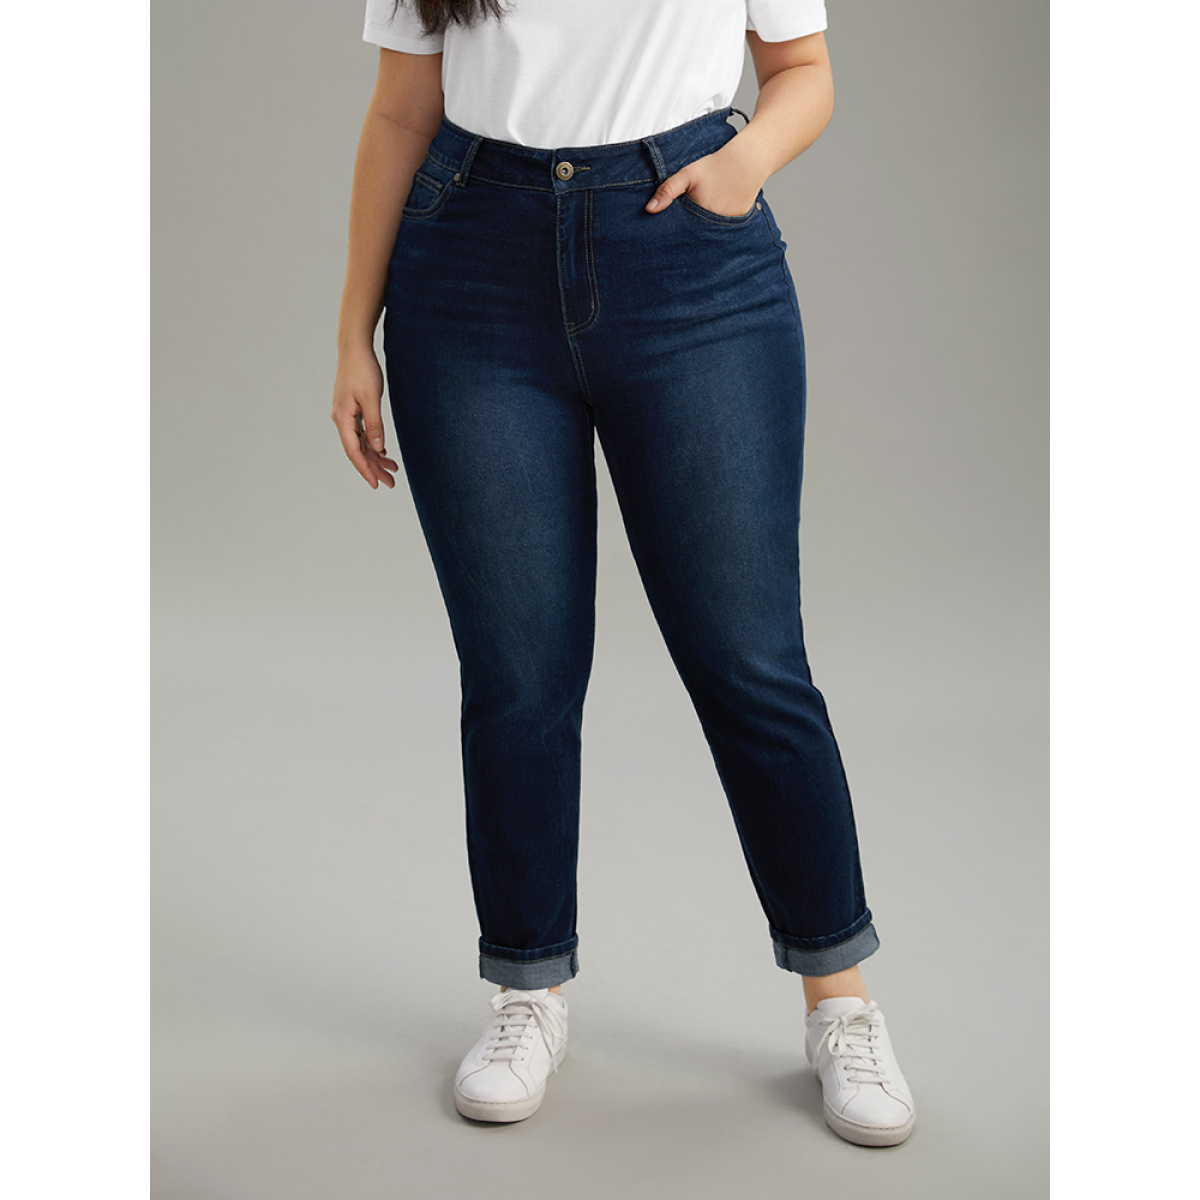 

Plus Size Cutoff Roll Hem Full Length Jeans Women DarkBlue Casual Plain Plain High stretch Pocket Jeans BloomChic